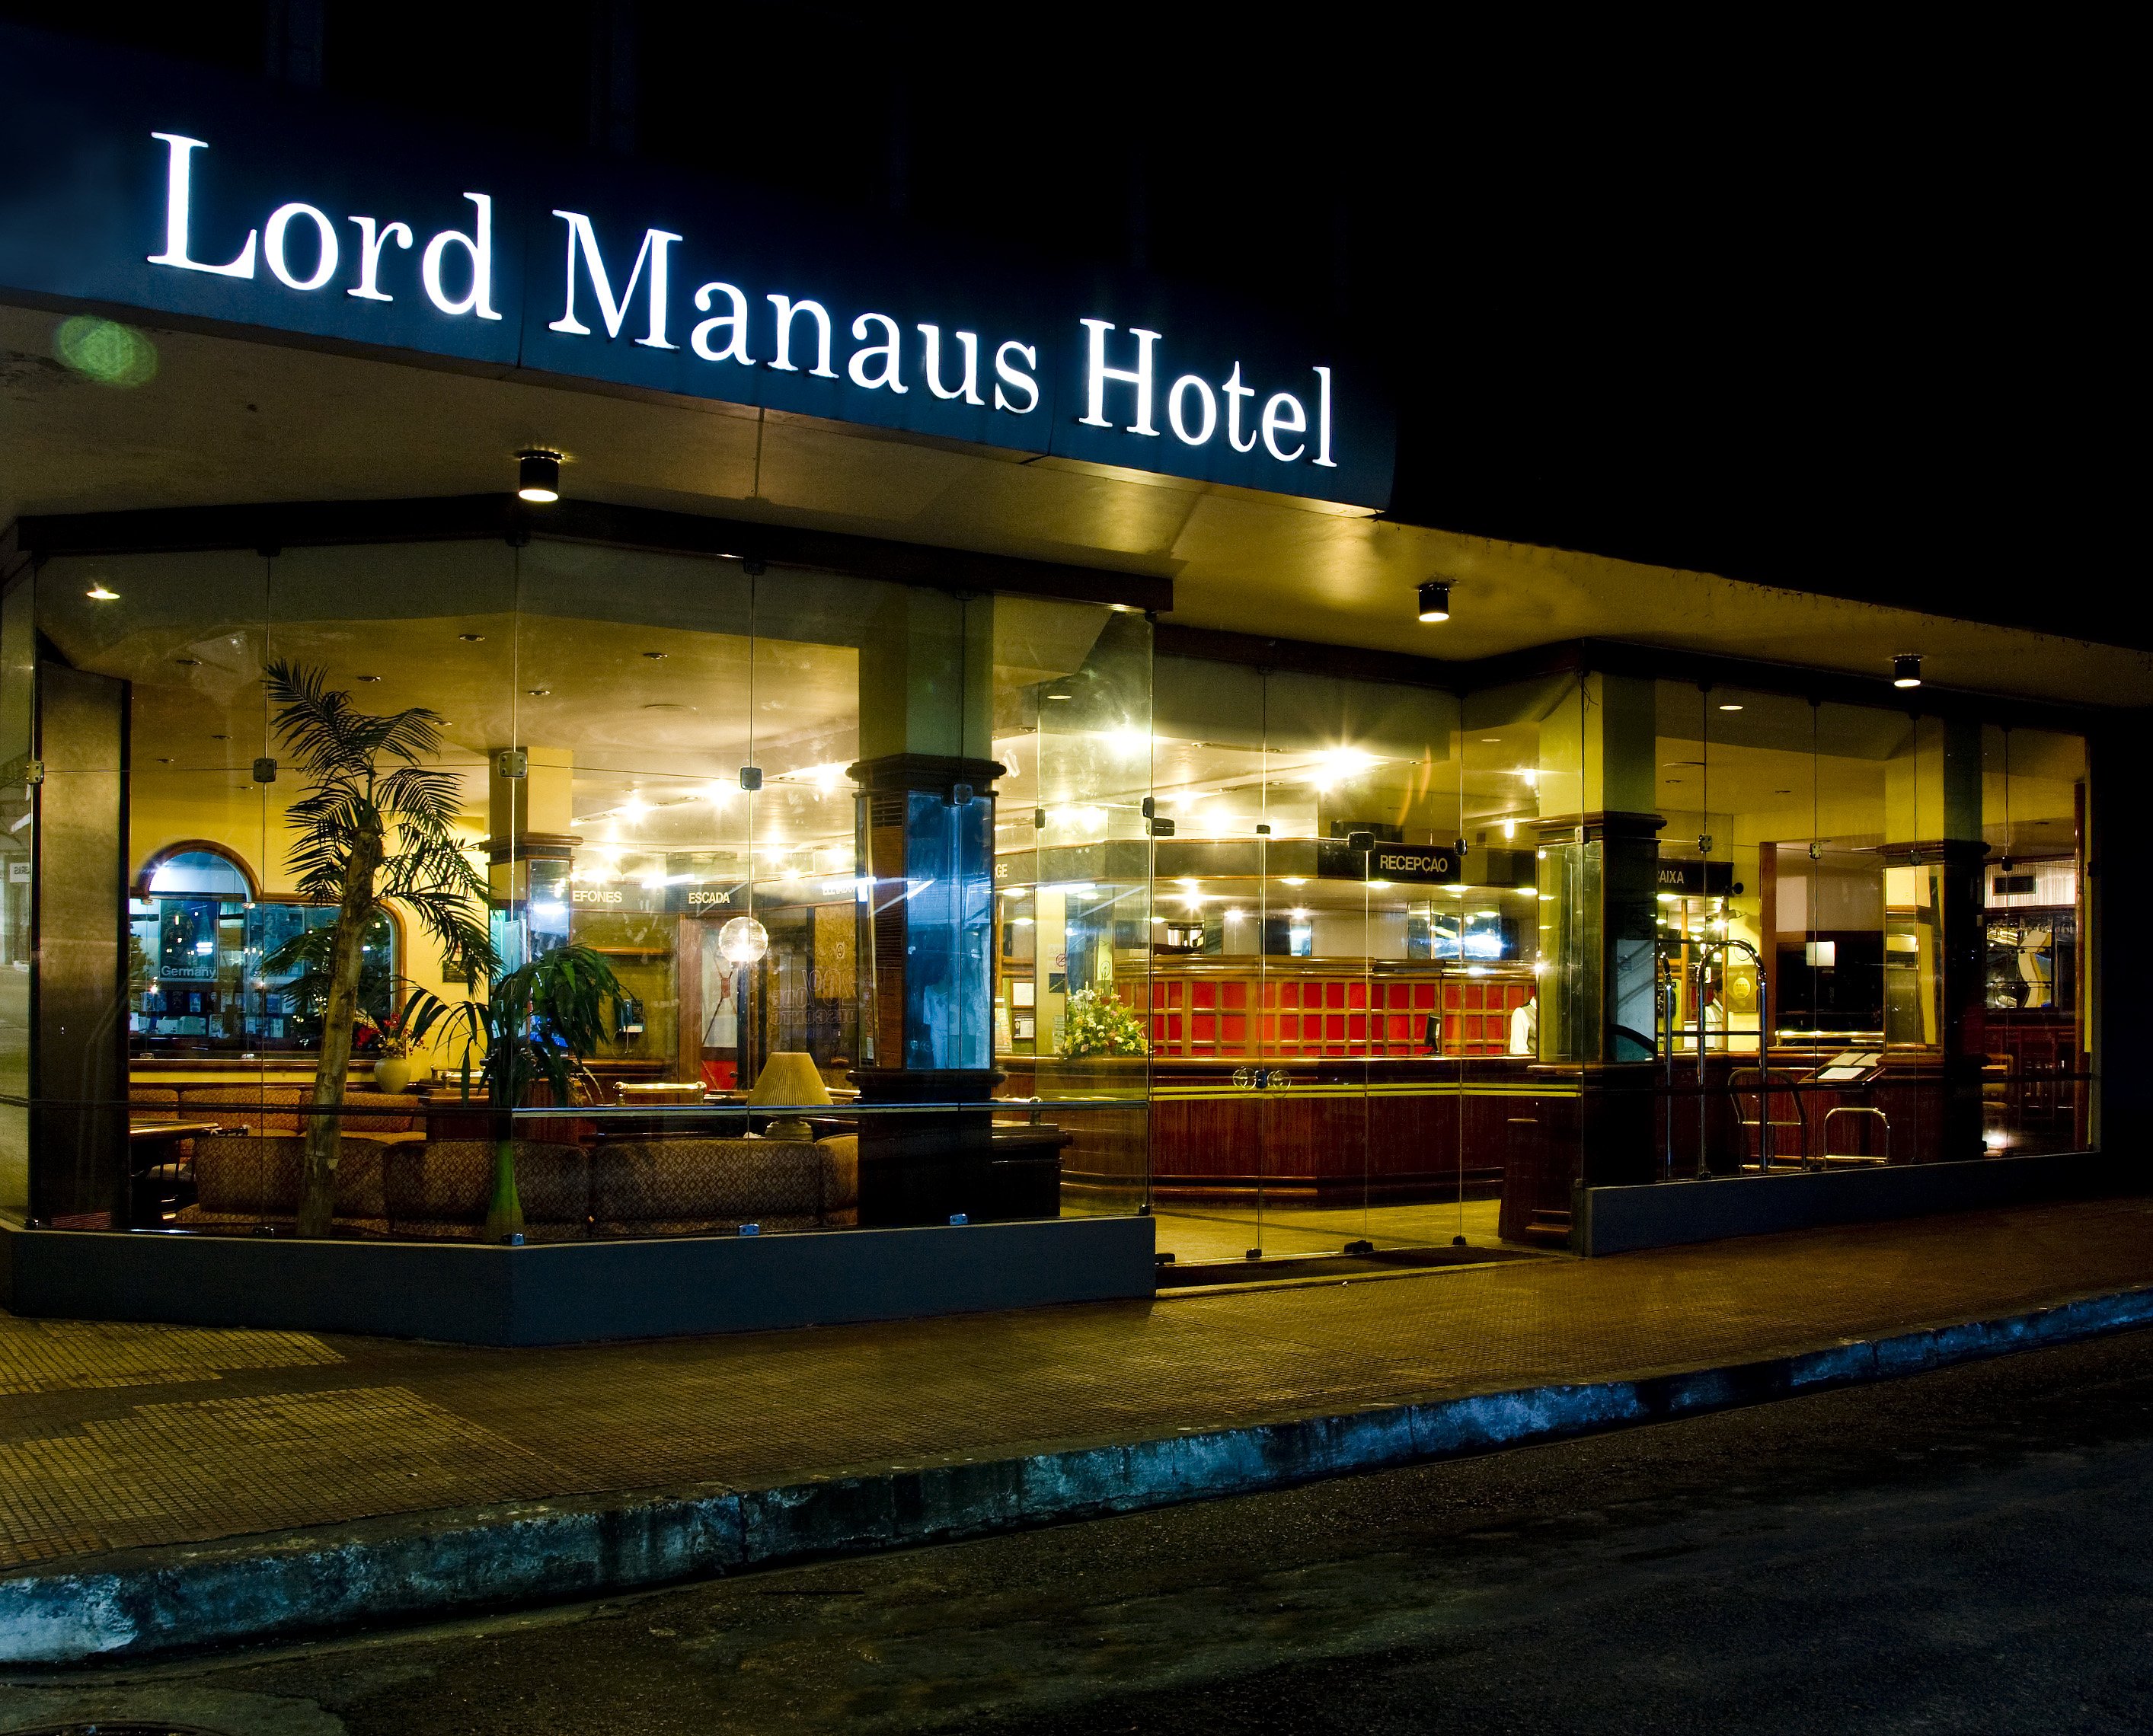 Lord Manaus Hotel image